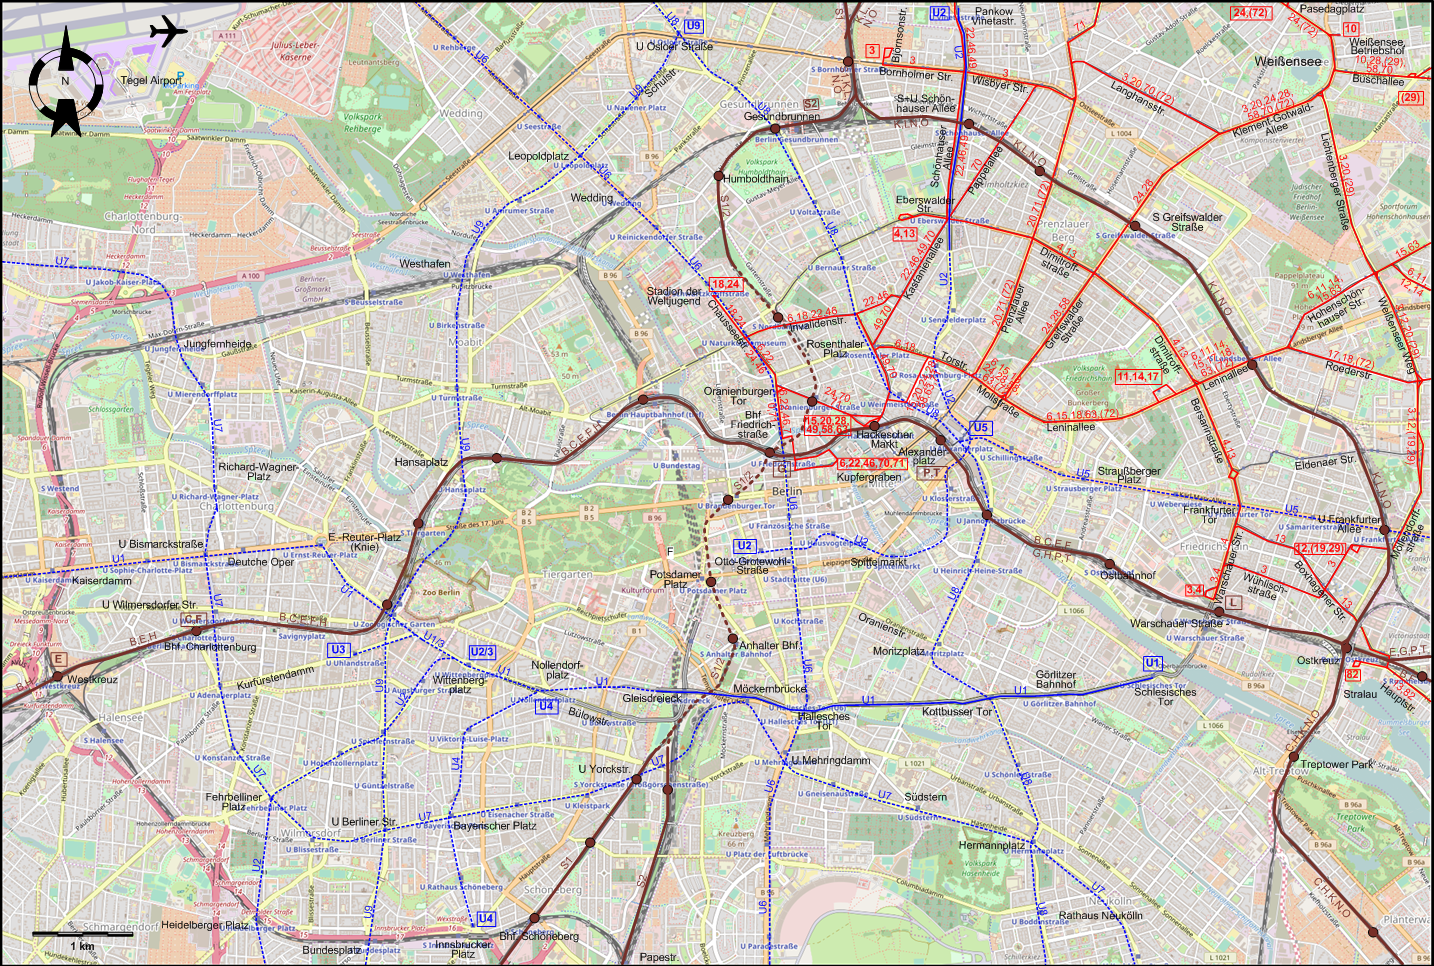 Berlin 1990 central tram map